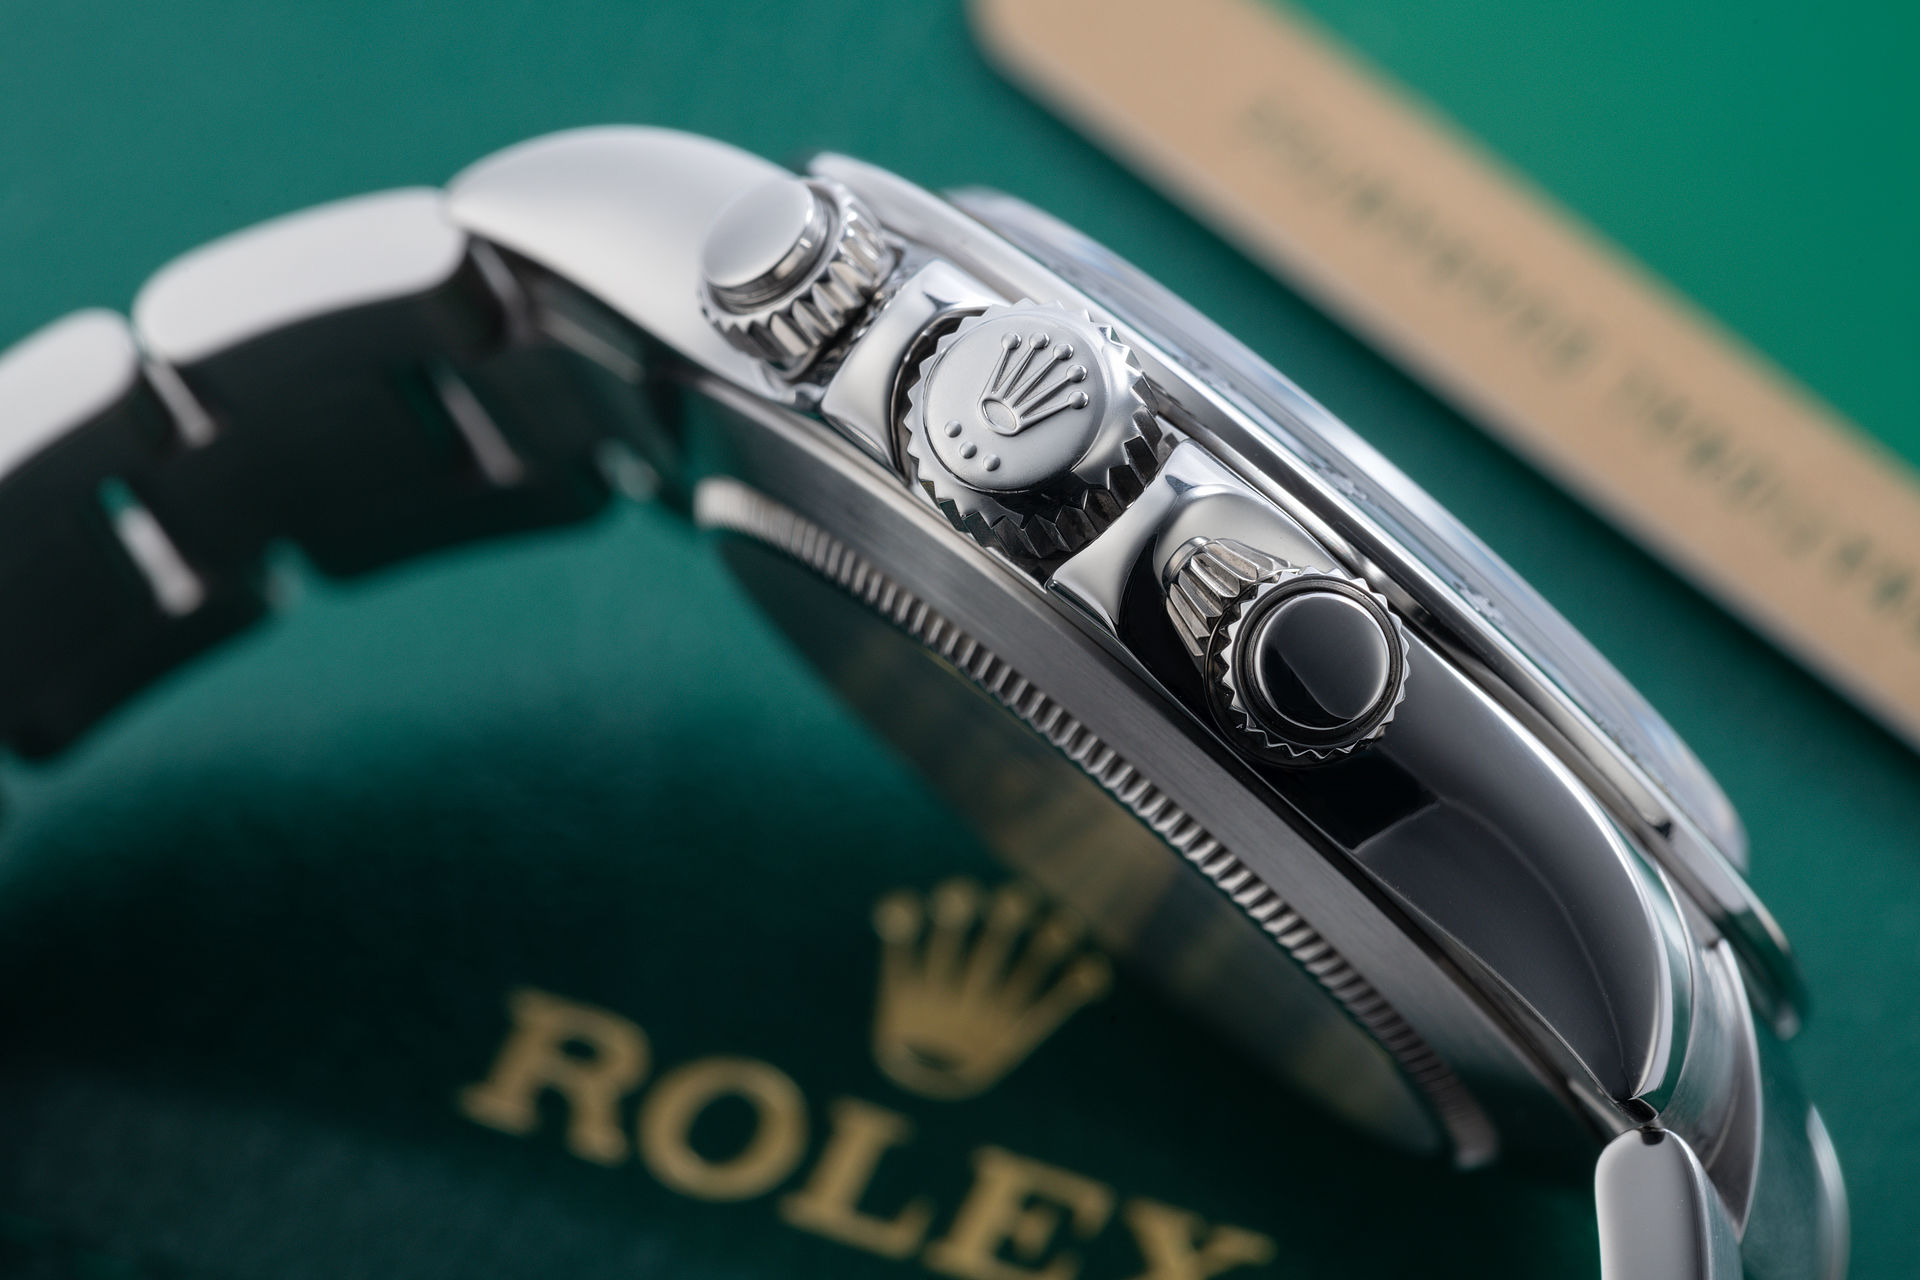 ref 116520 | 'Chromalight' Black Dial | Rolex Cosmograph Daytona